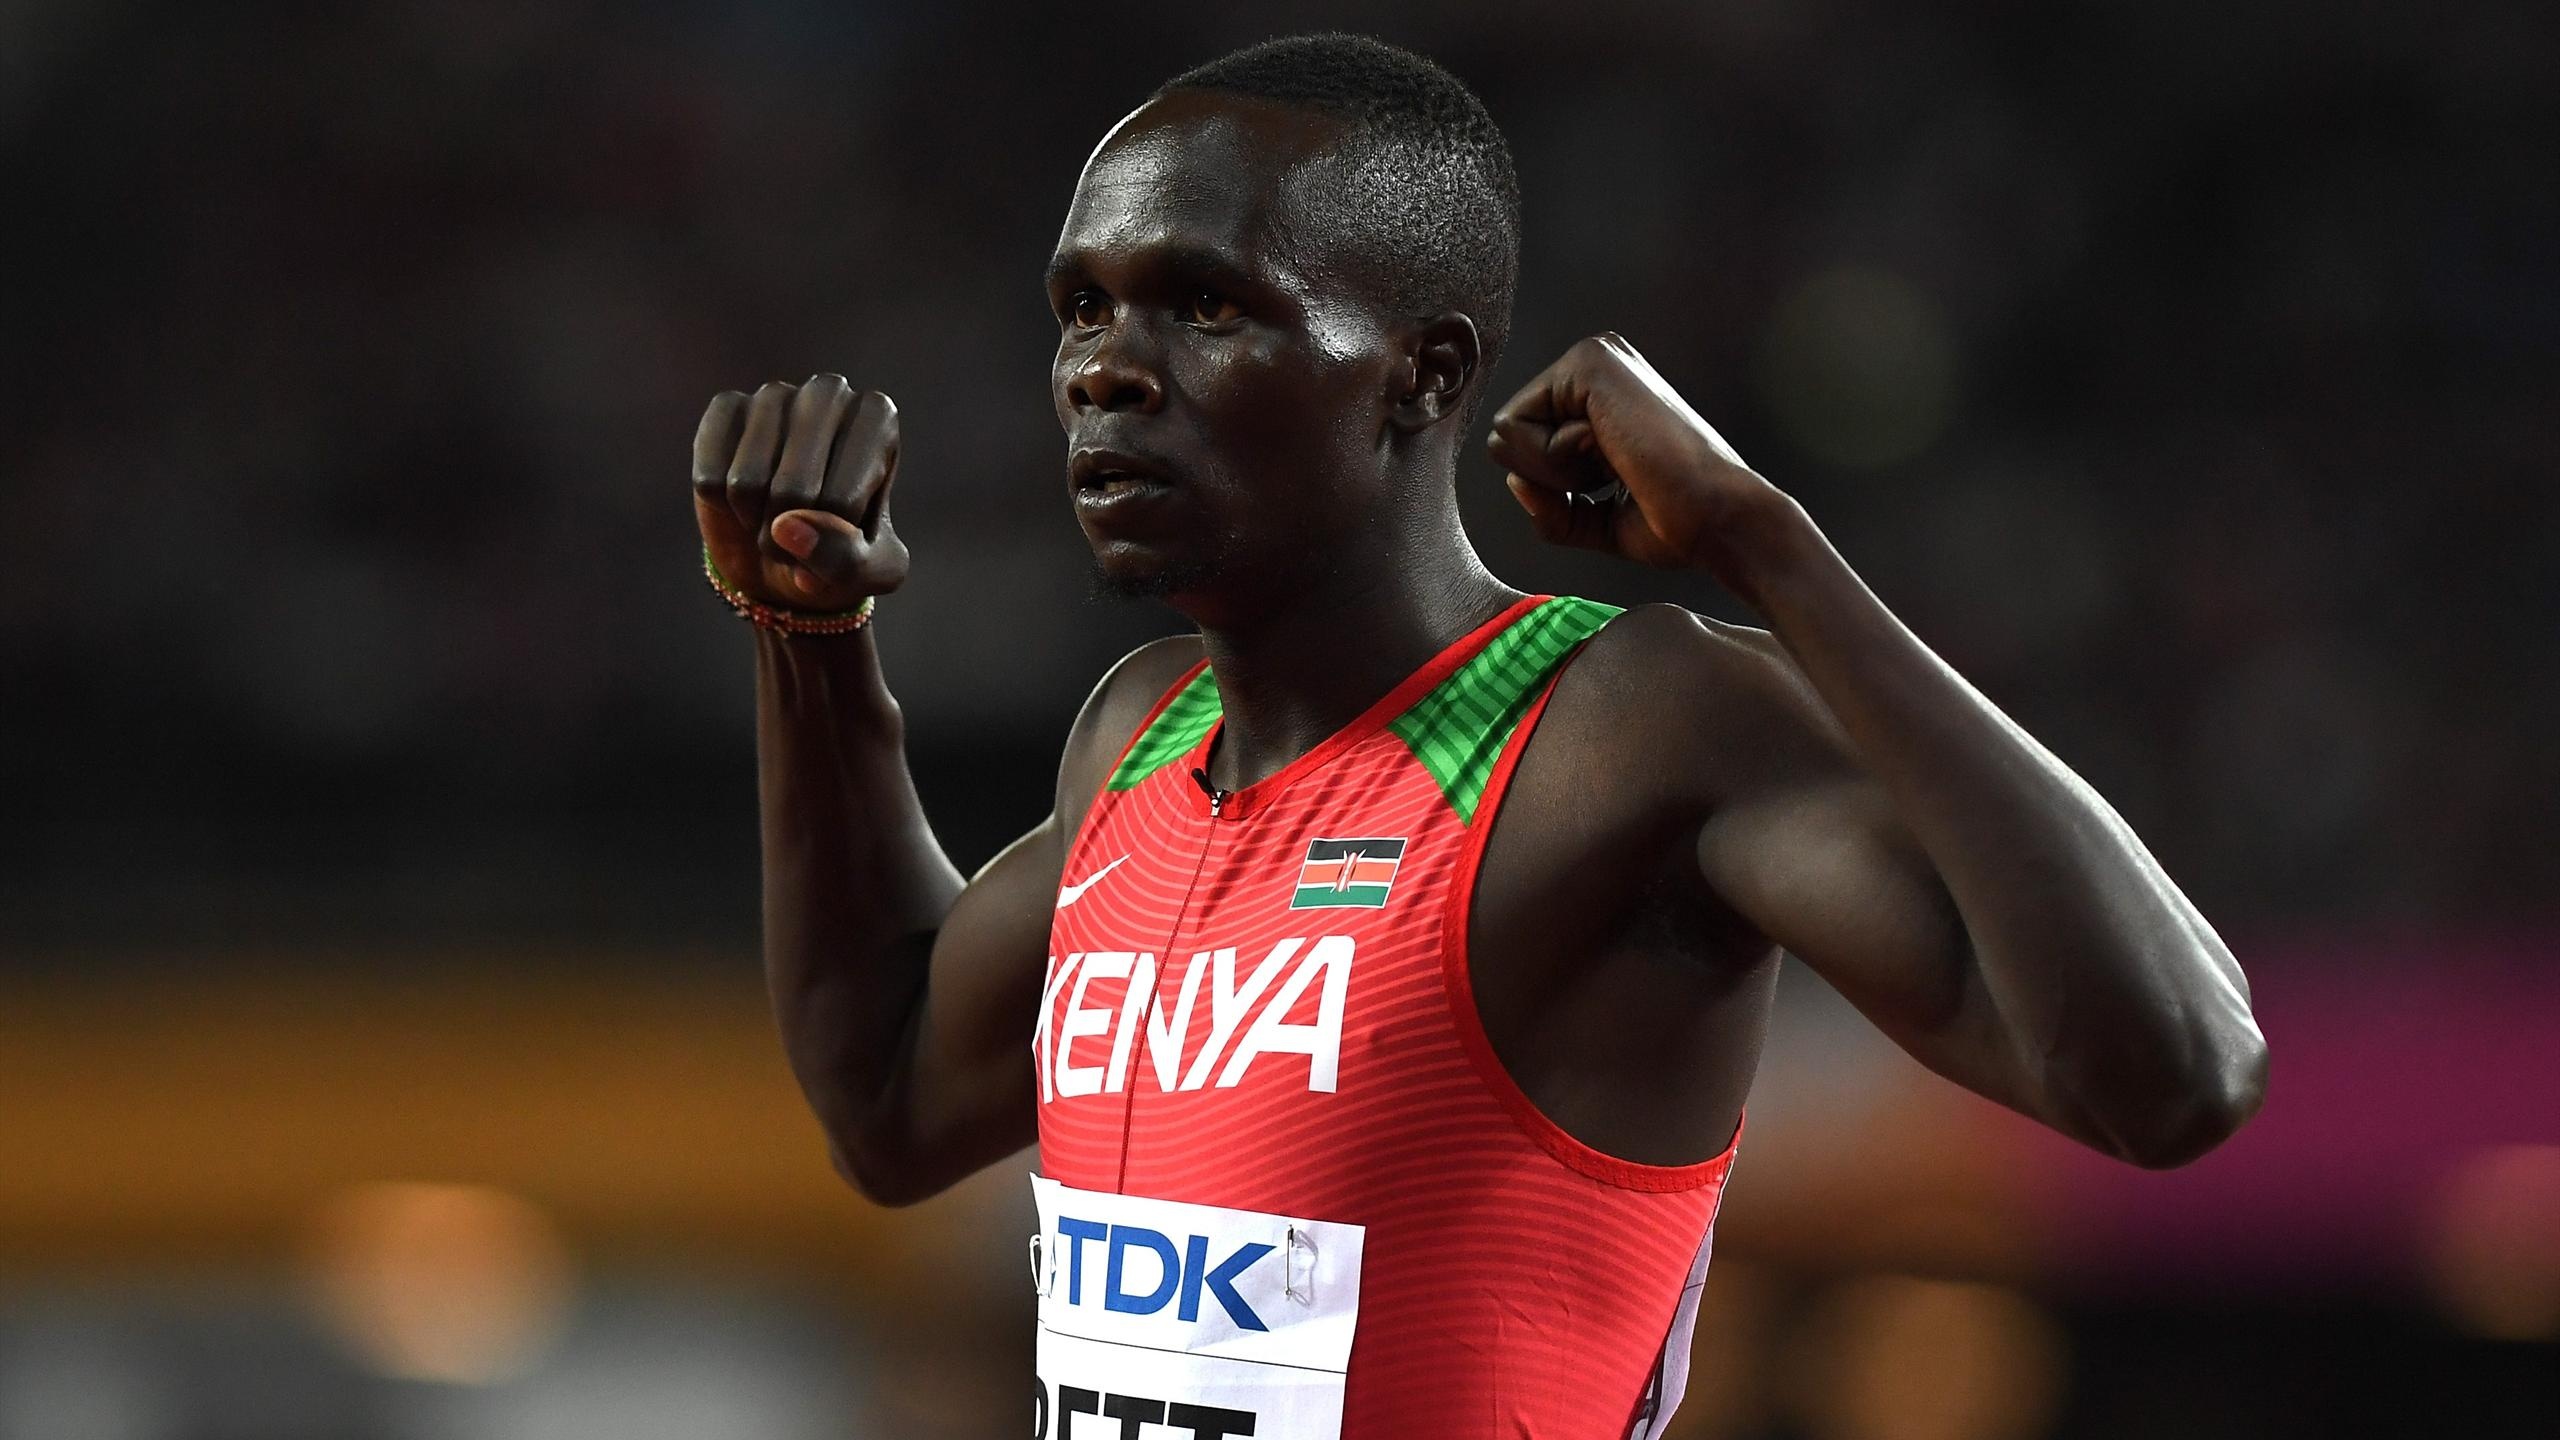 Kipyegon Bett, Positive doping test, EPO scandal, Kenyan athlete, 2560x1440 HD Desktop